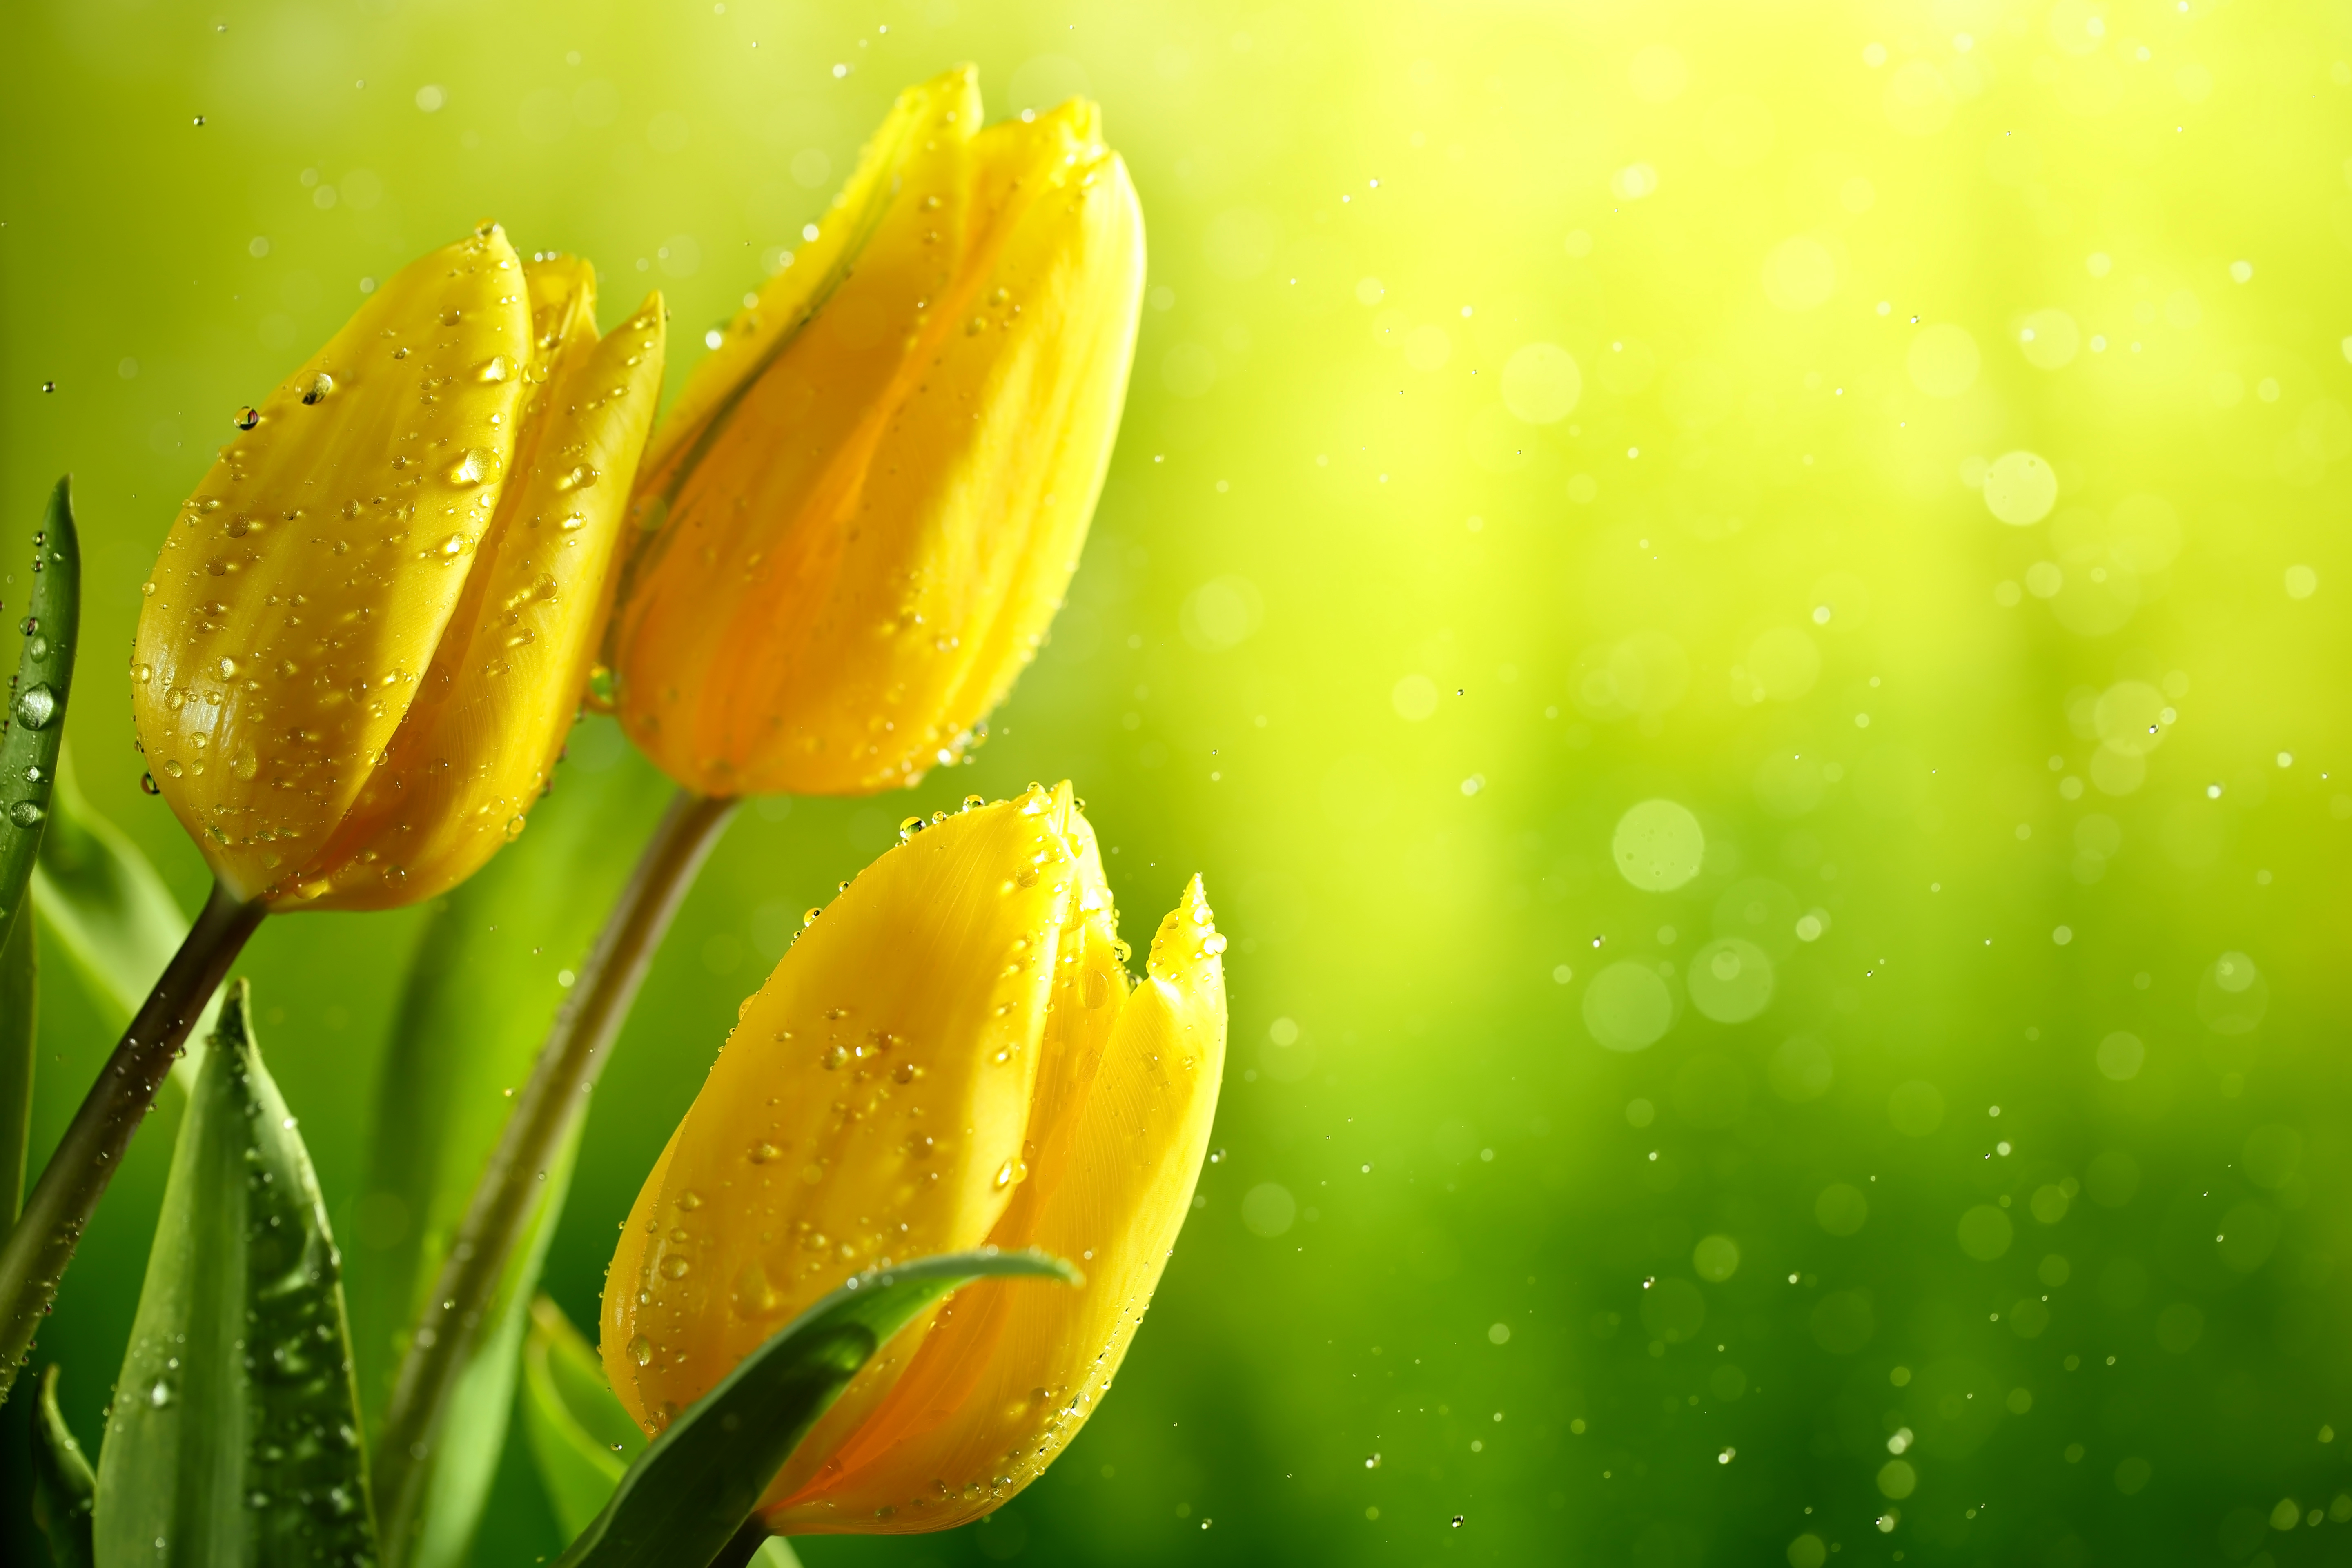 flowers, yellow tulips, 6K wallpaper, buds, bouquet, spring, water drops, цветы, желтые тюльпаны, 6К обои, бутоны, букет, весна, капли воды